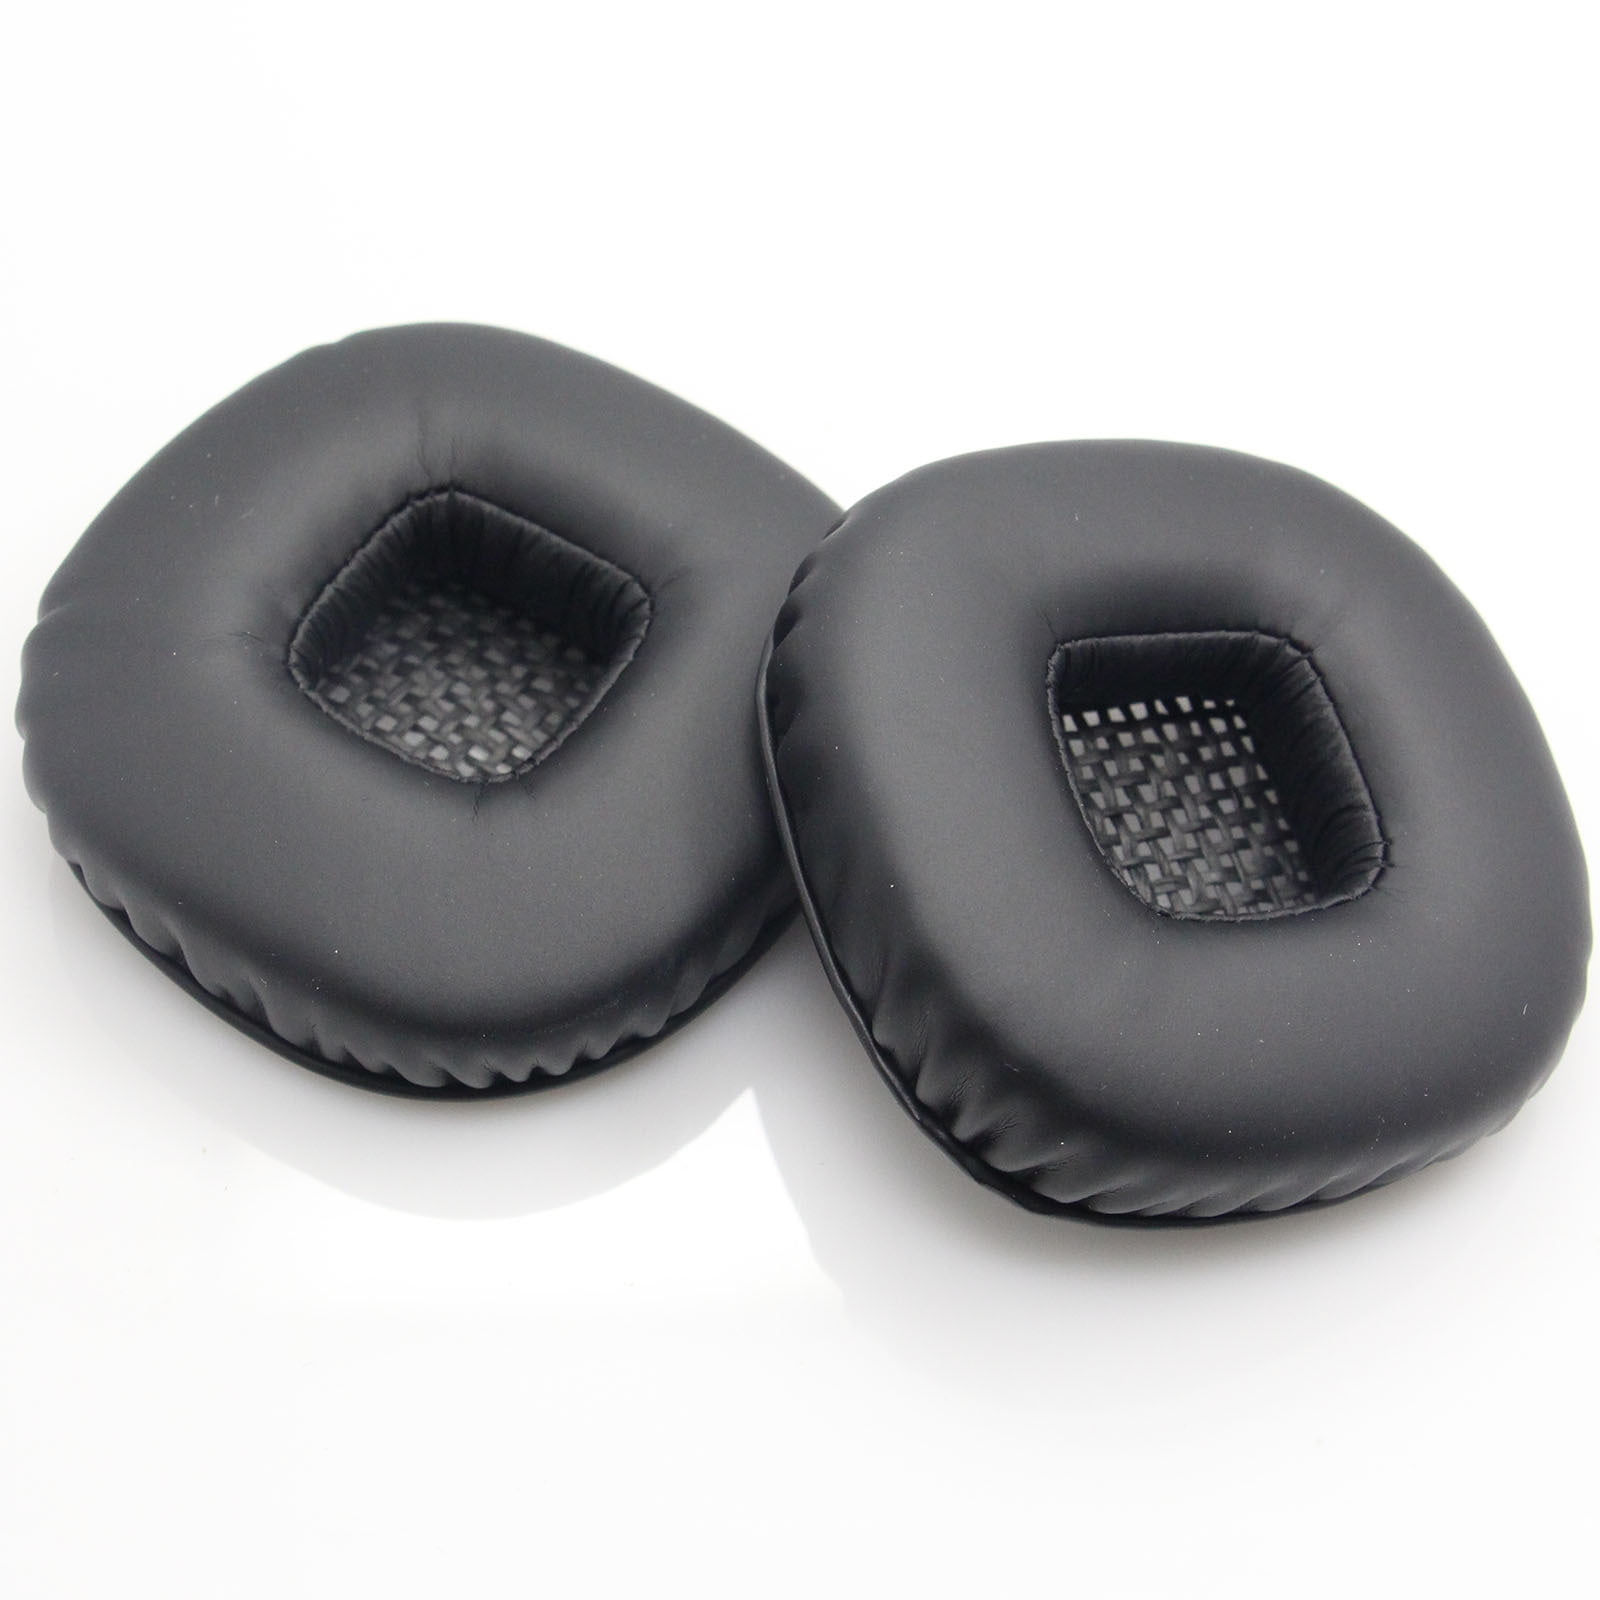 Earpad Ear Cushion Cover Replacement For Marshall Major On-Ear Headset Headphone